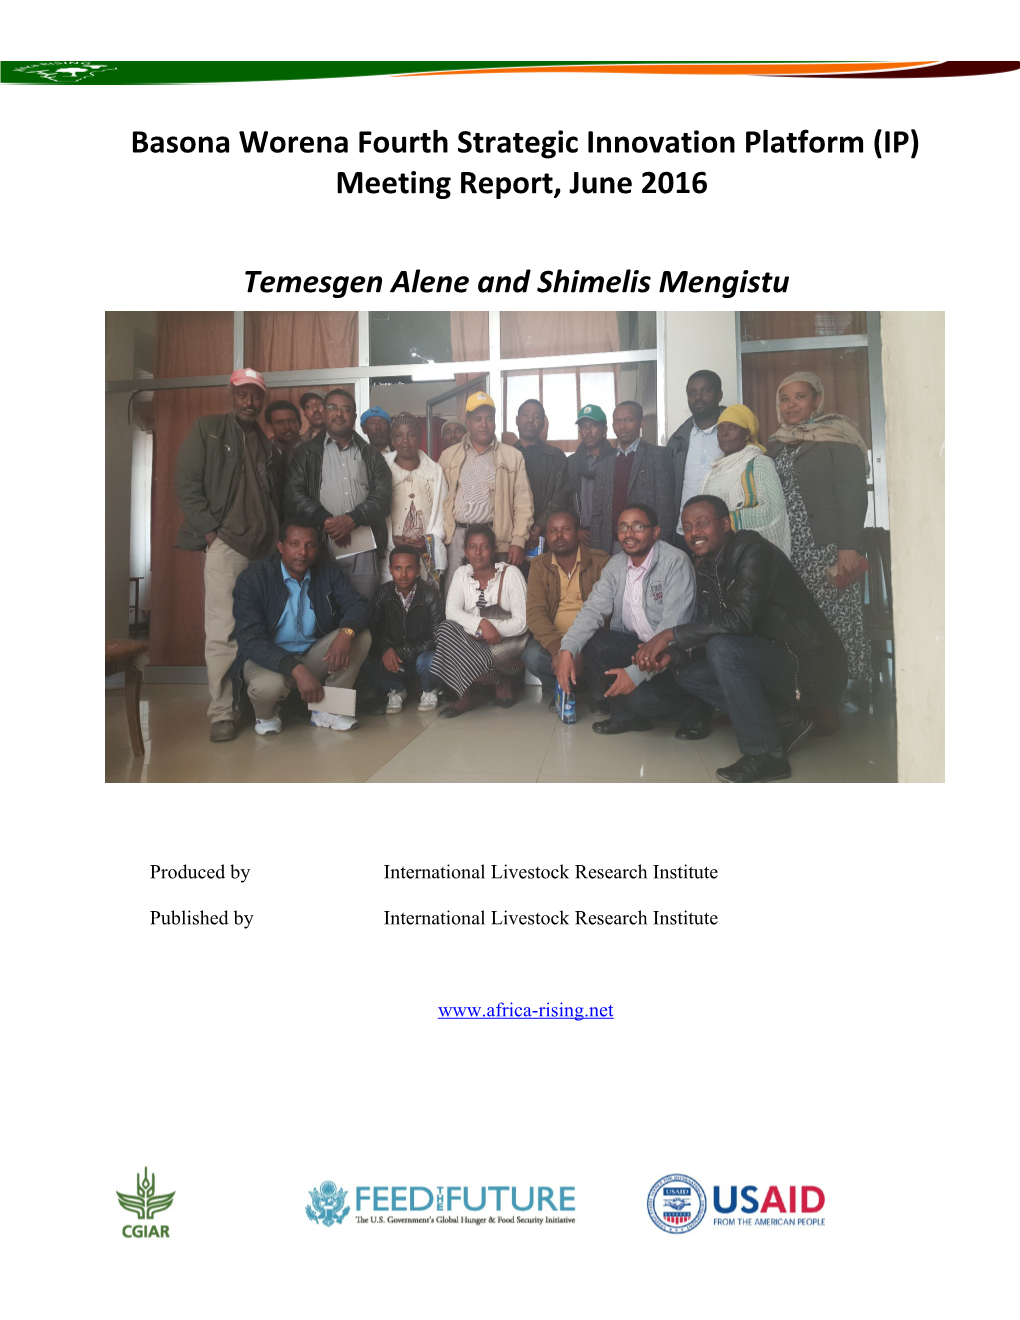 Basona Worena Fourth Strategic Innovation Platform (IP) Meeting Report, June 2016